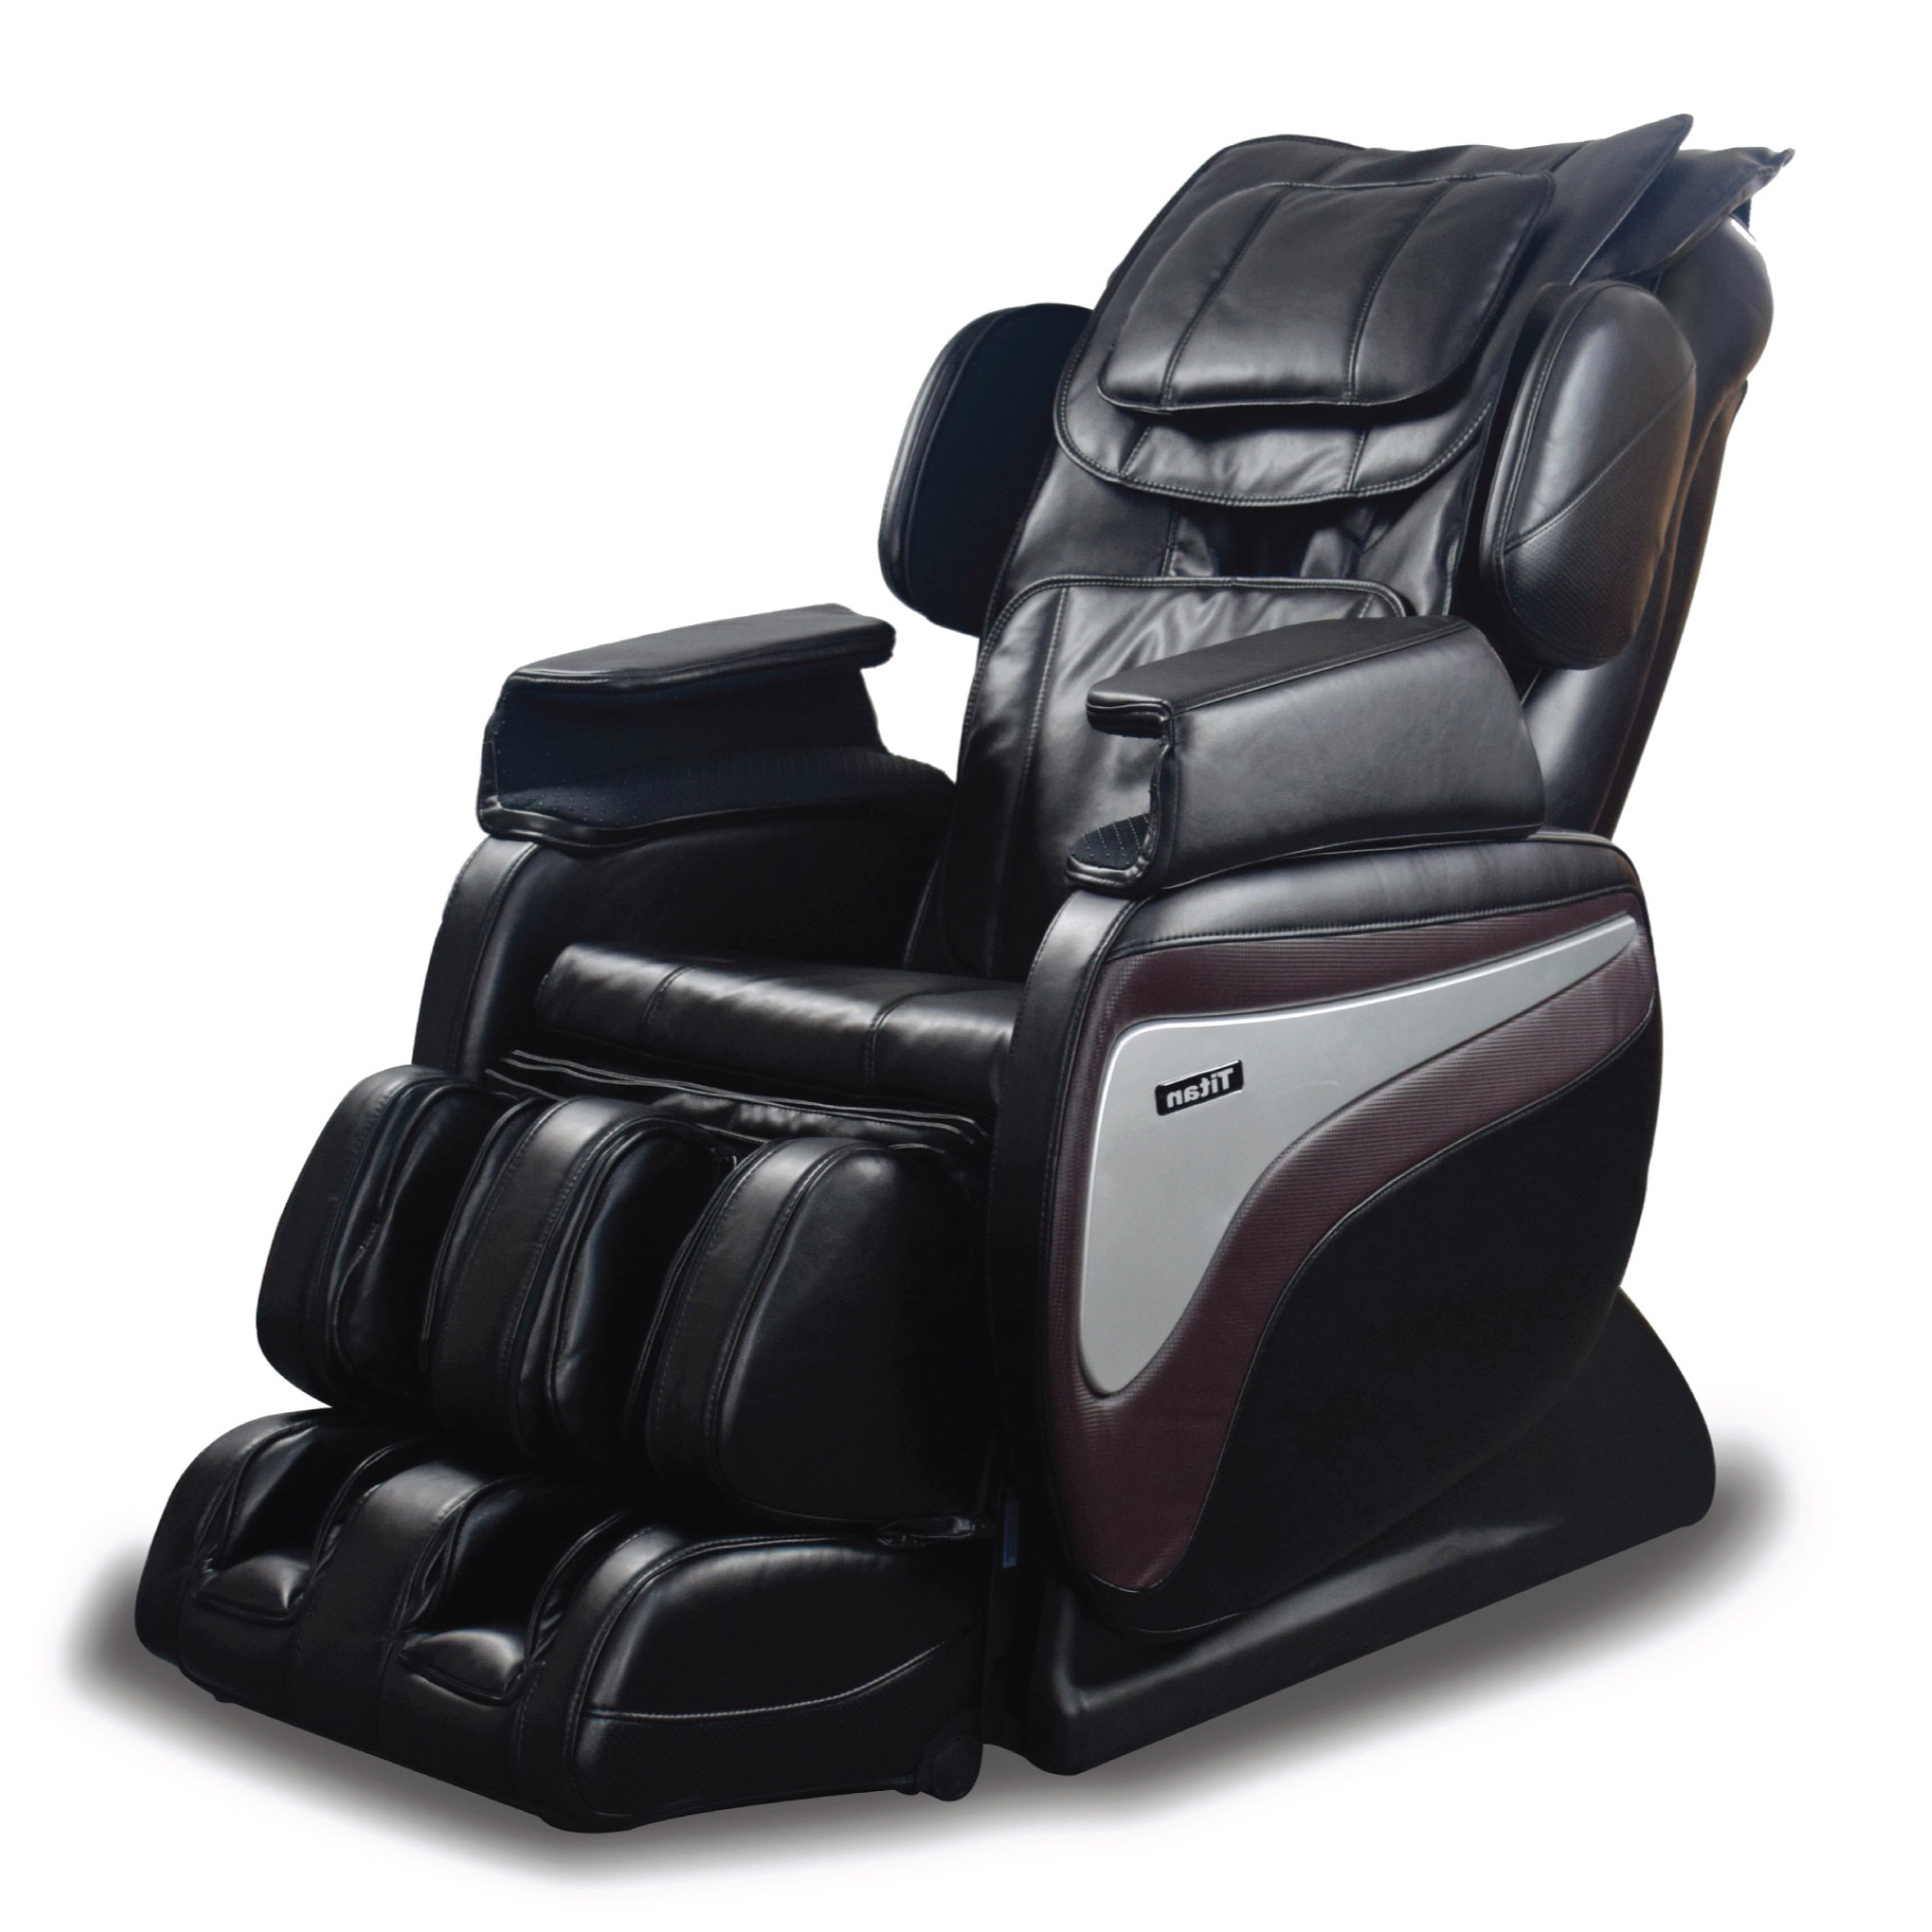 Titan TI-8700 Massage Chair - Black - Front Angle View